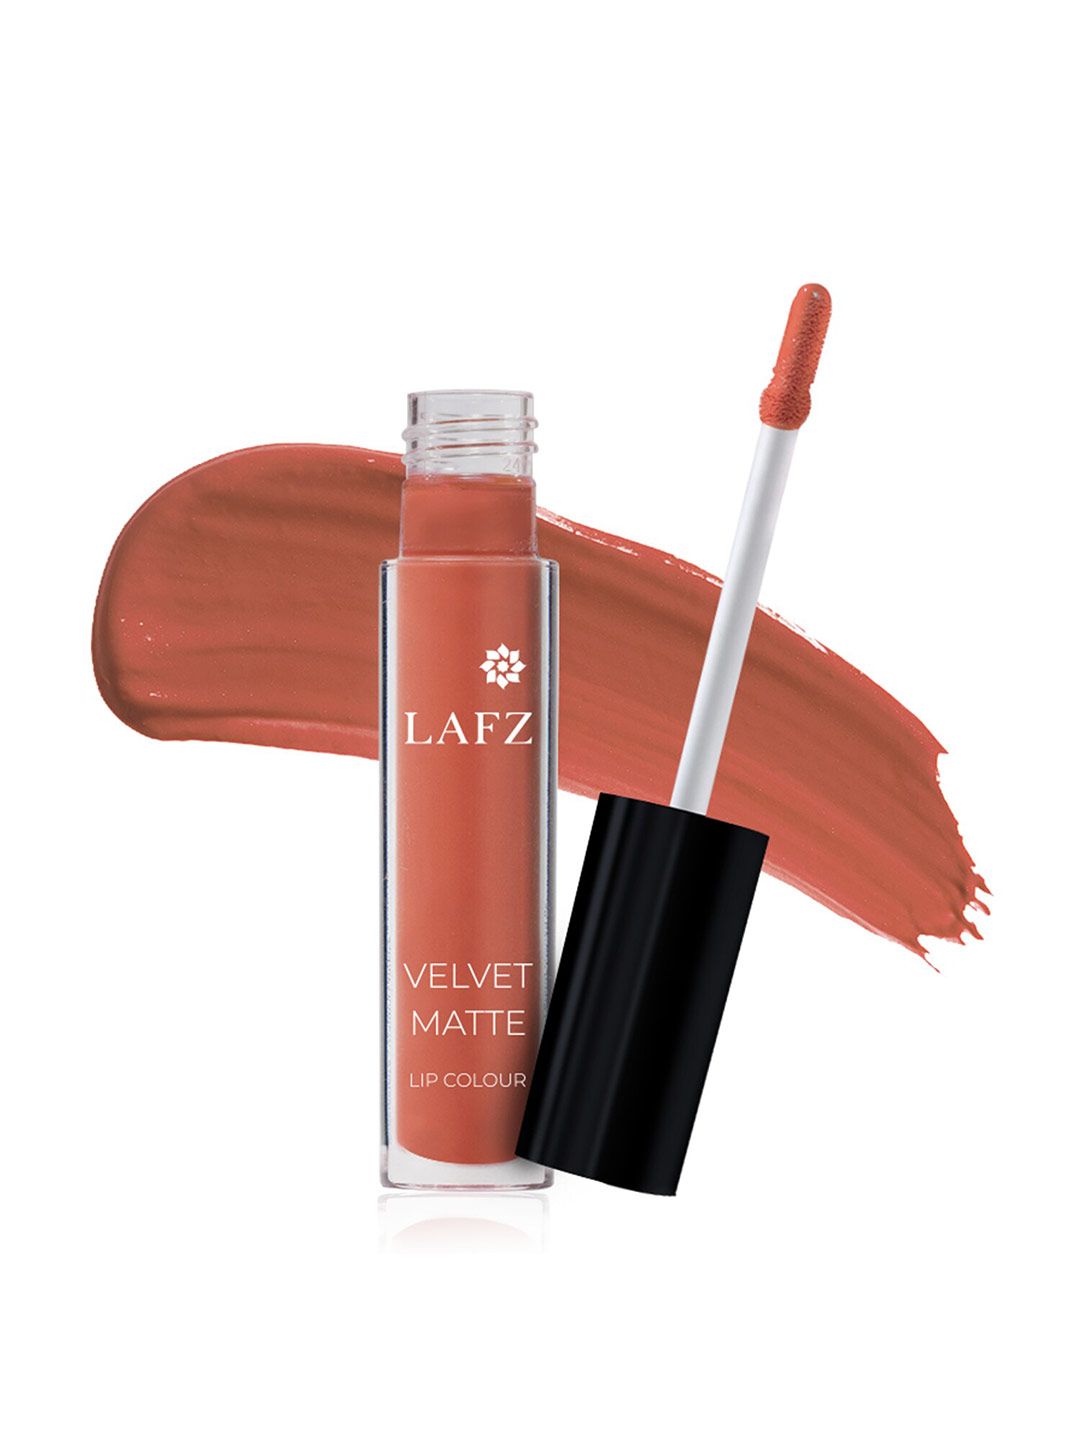 LAFZ Velvet Matte Lip Color - Pumpkin 5.5 ml Price in India